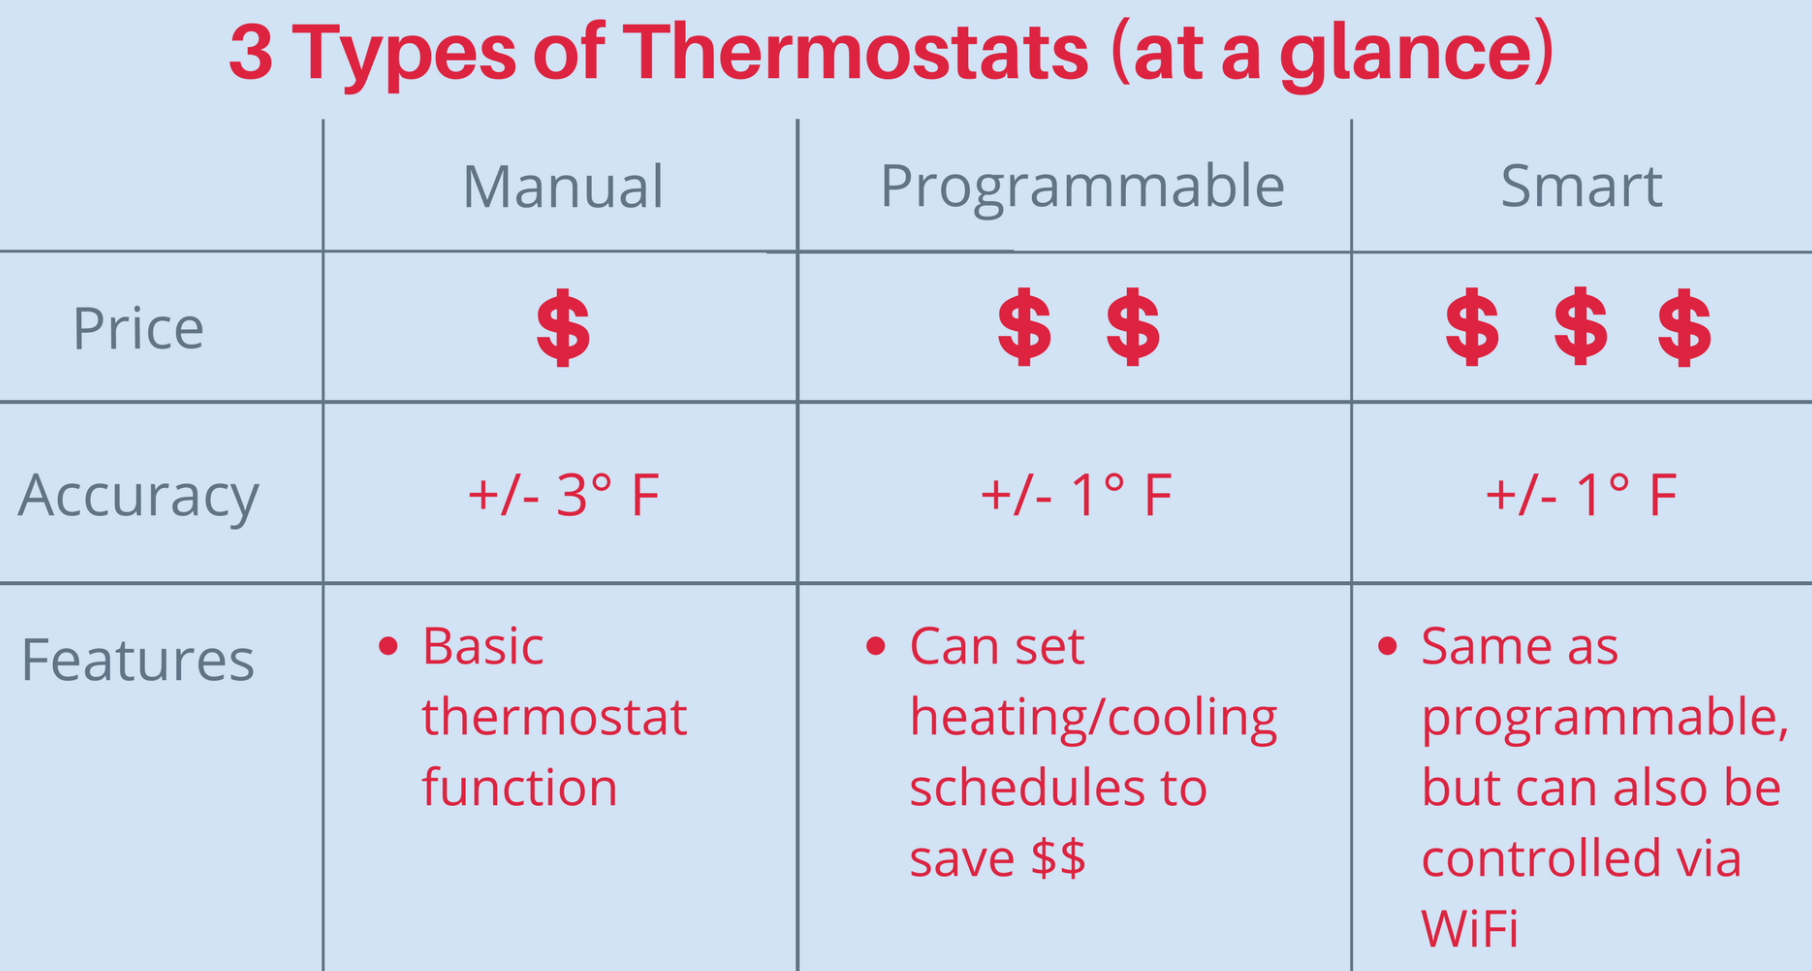 comparing manual vs programmable vs smart thermostats